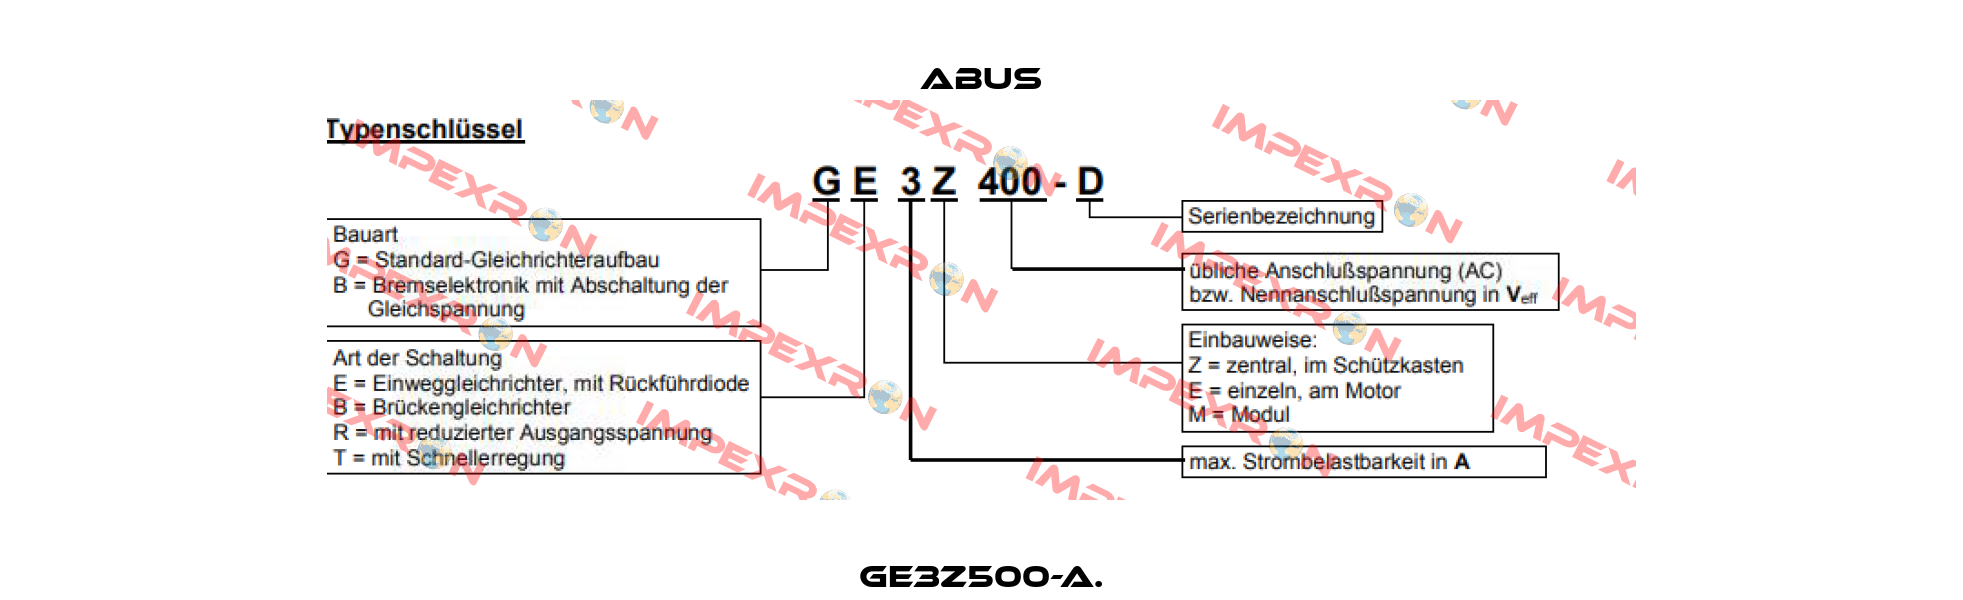 GE3Z500-A. Abus